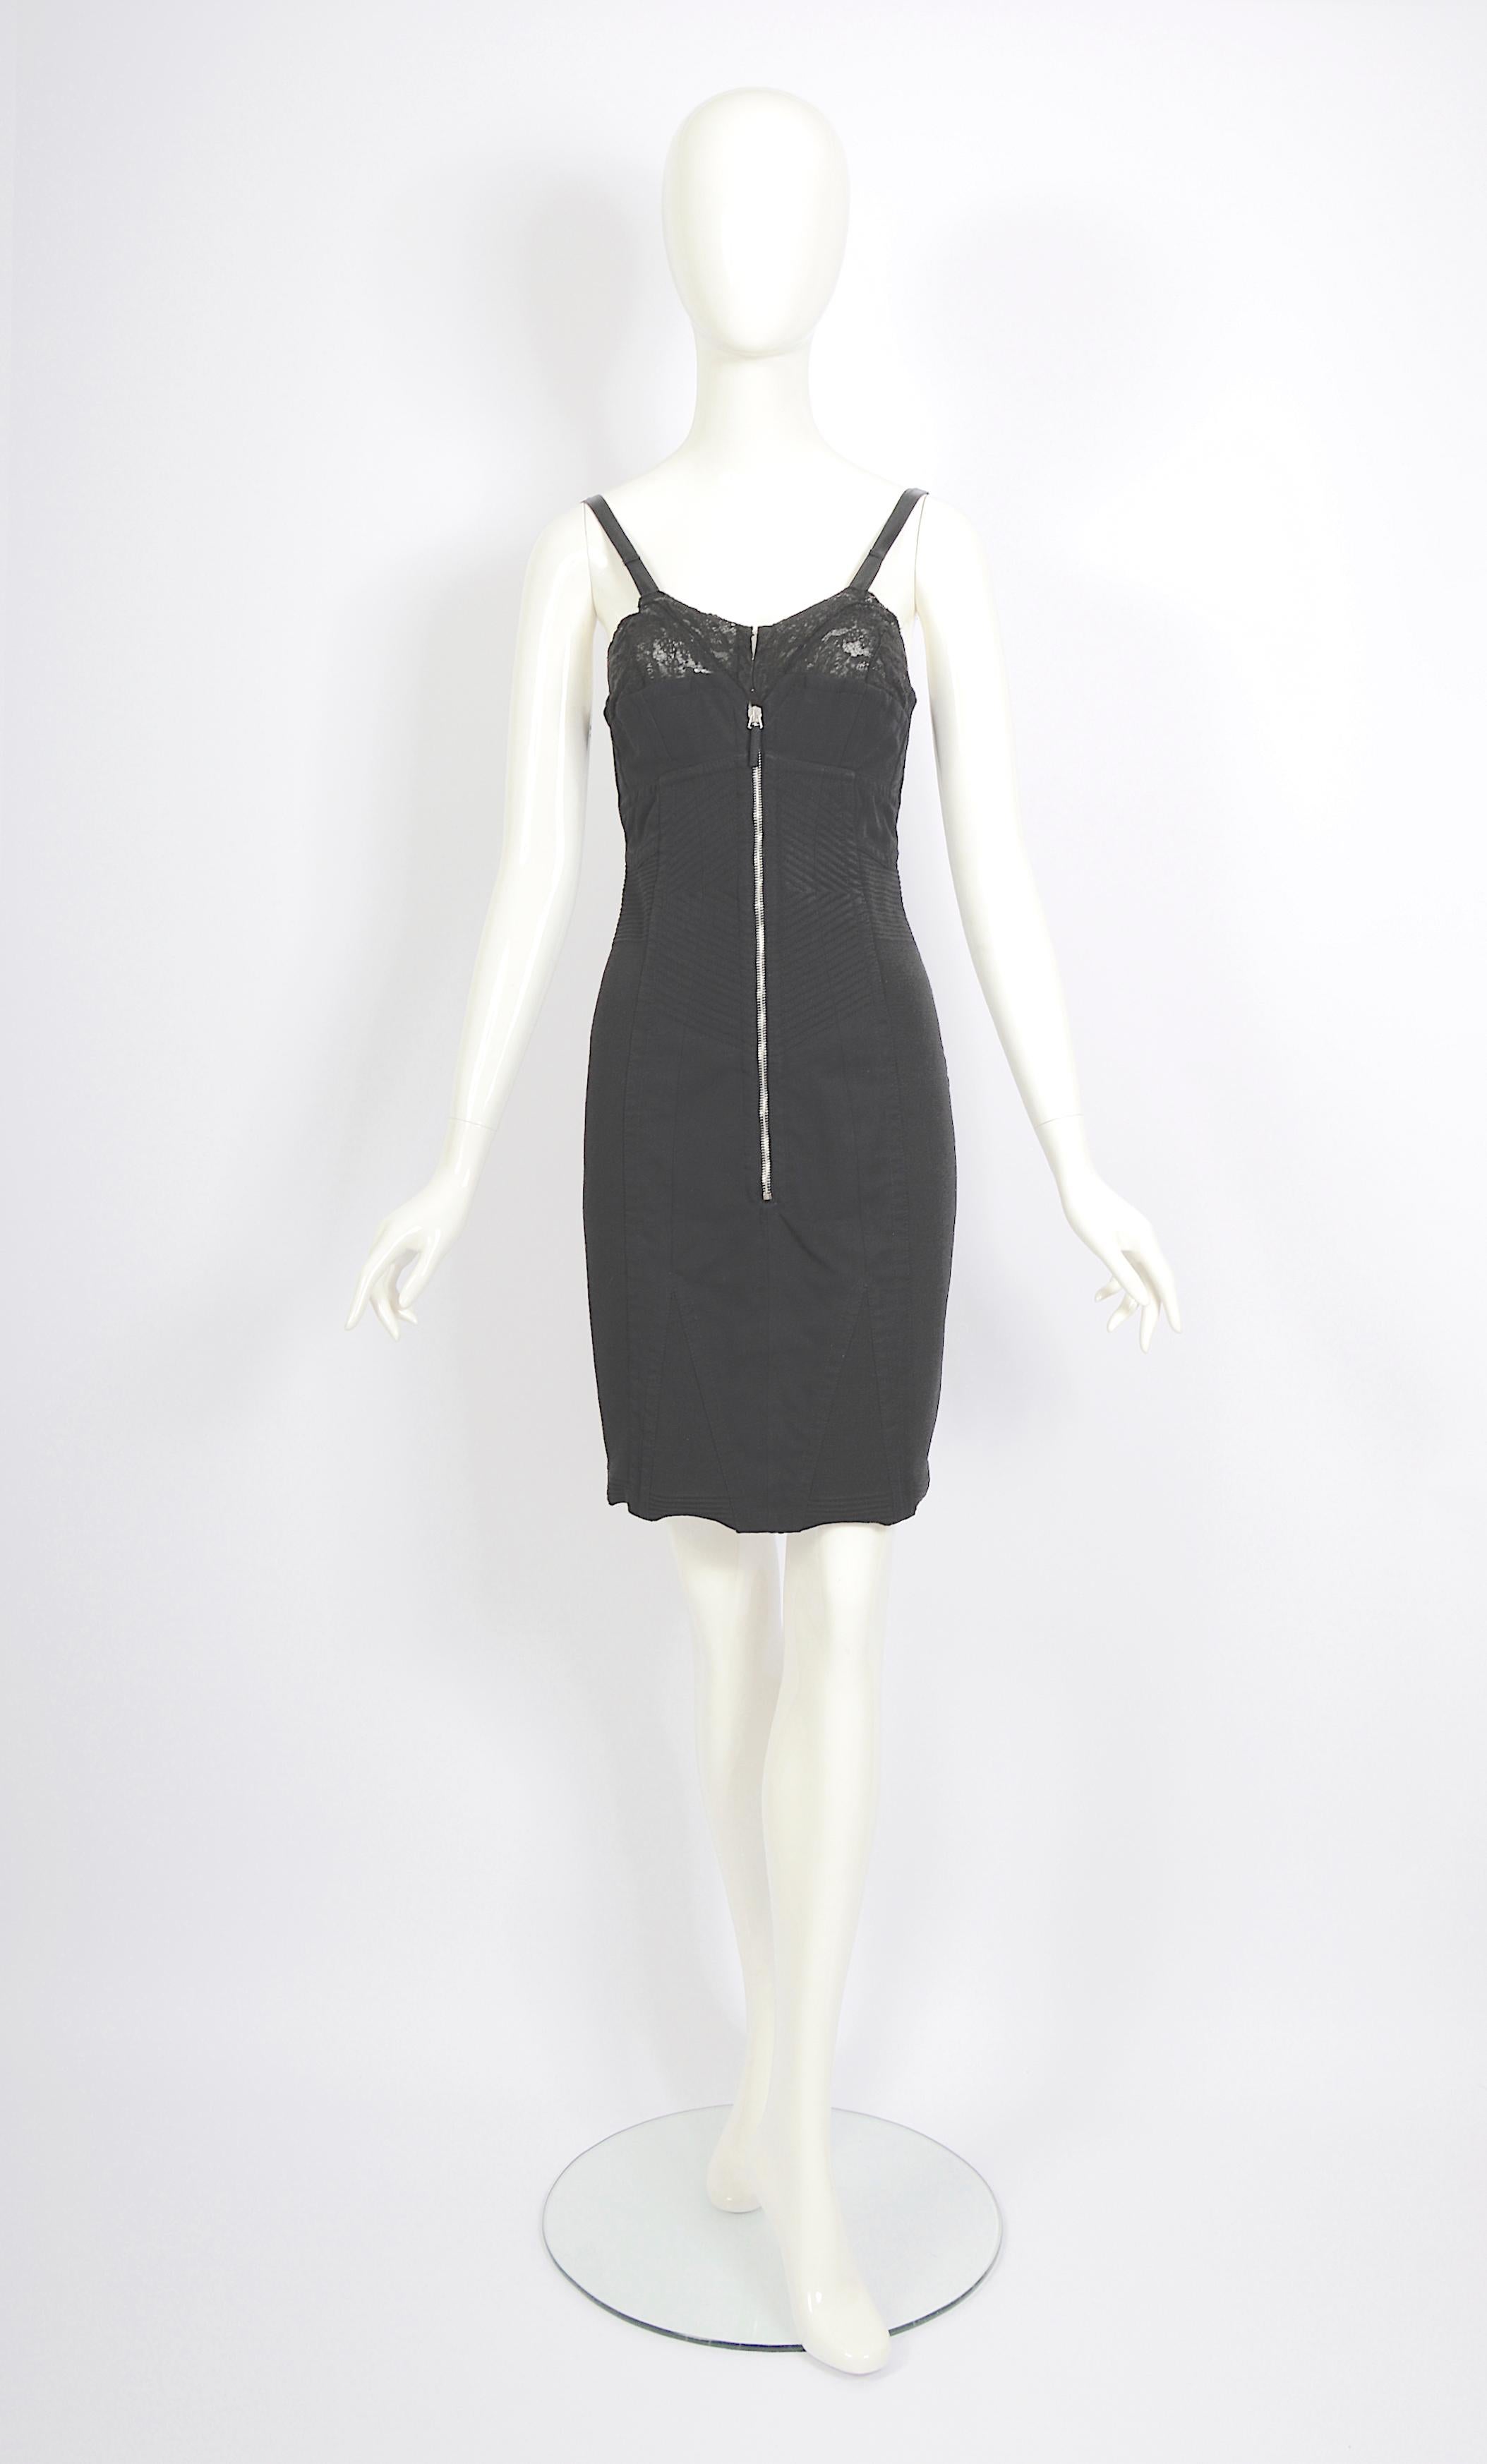 Jean Paul Gaultier 1990s vintage Important lingerie style corset bra black dress In Excellent Condition For Sale In Antwerpen, Vlaams Gewest